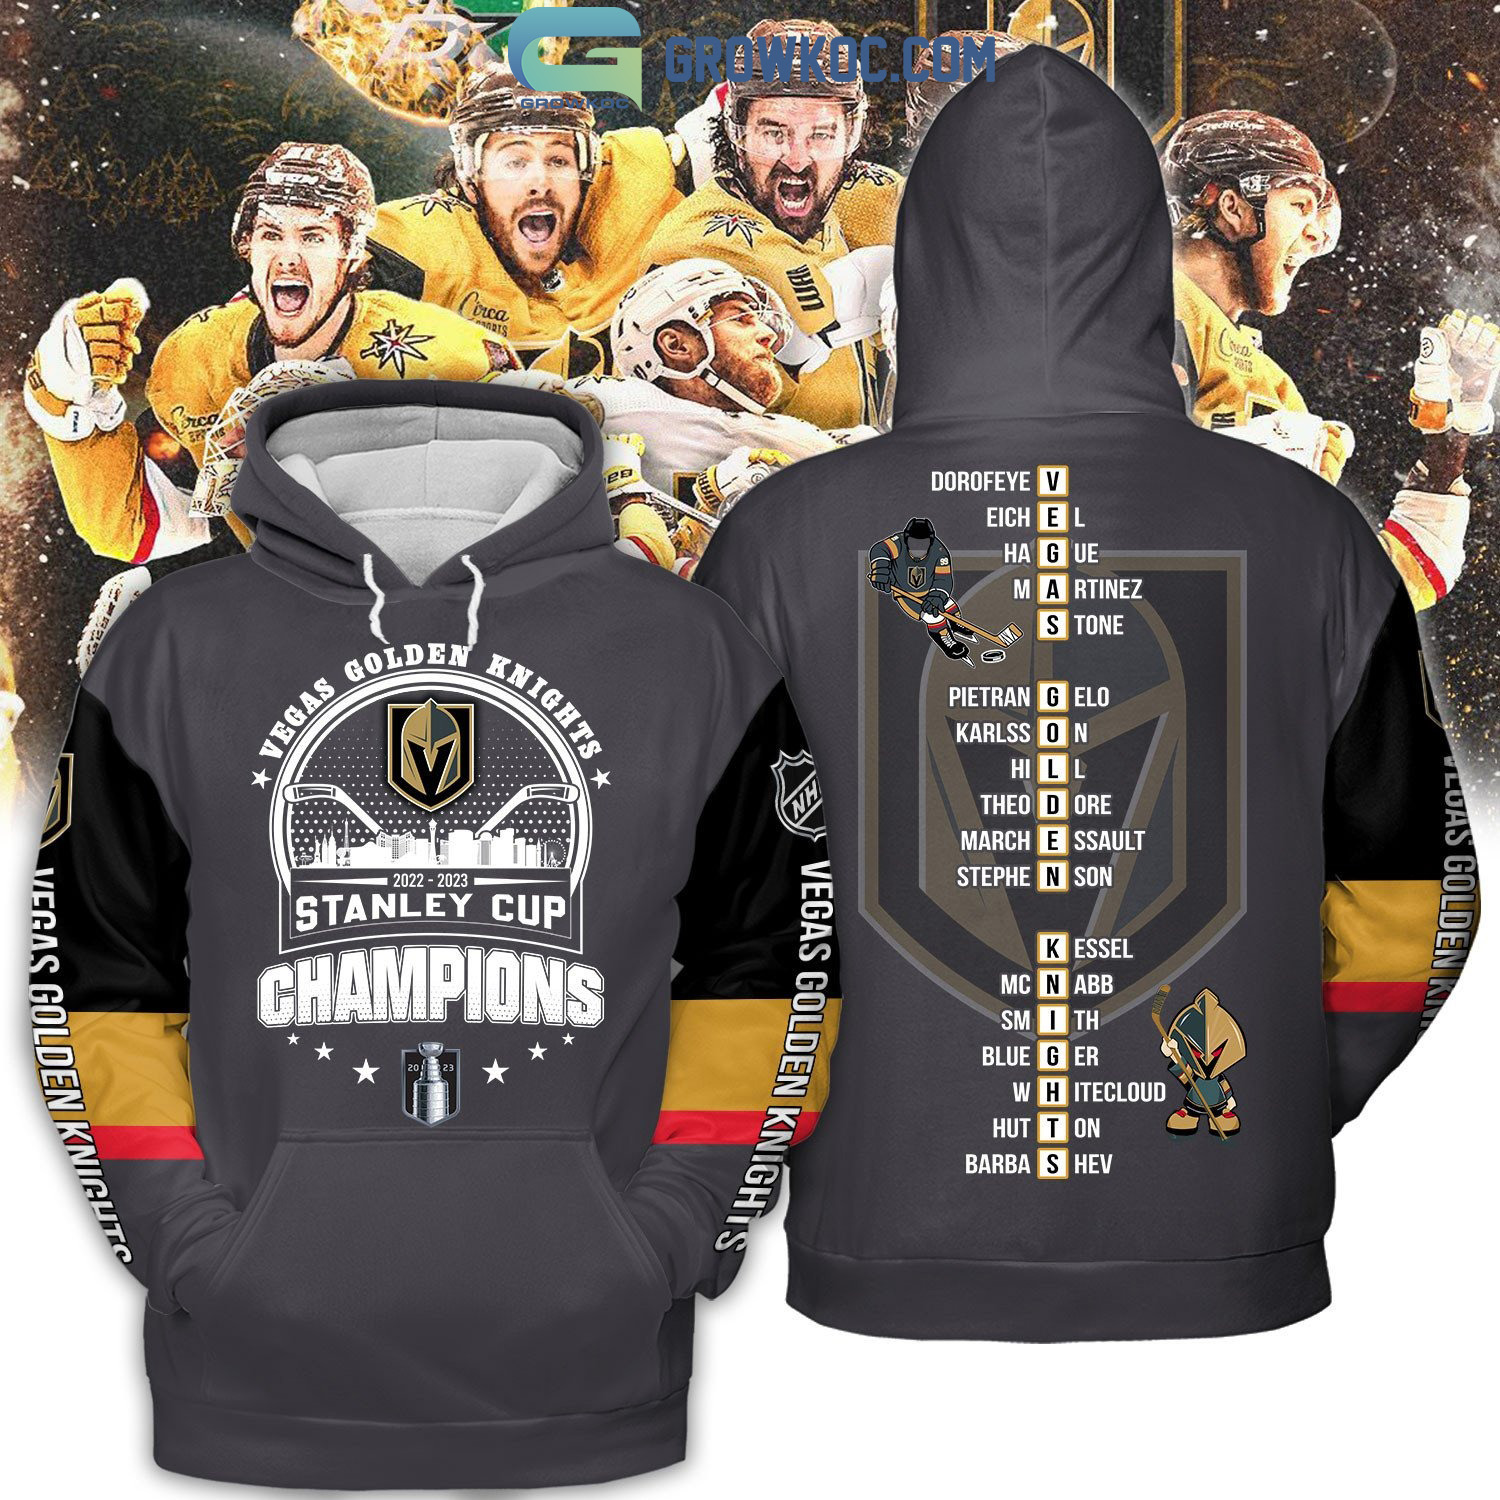 Vegas Golden Knights Love Gold Design Team Stanley Cup Champions Hoodie T  Shirt - Growkoc